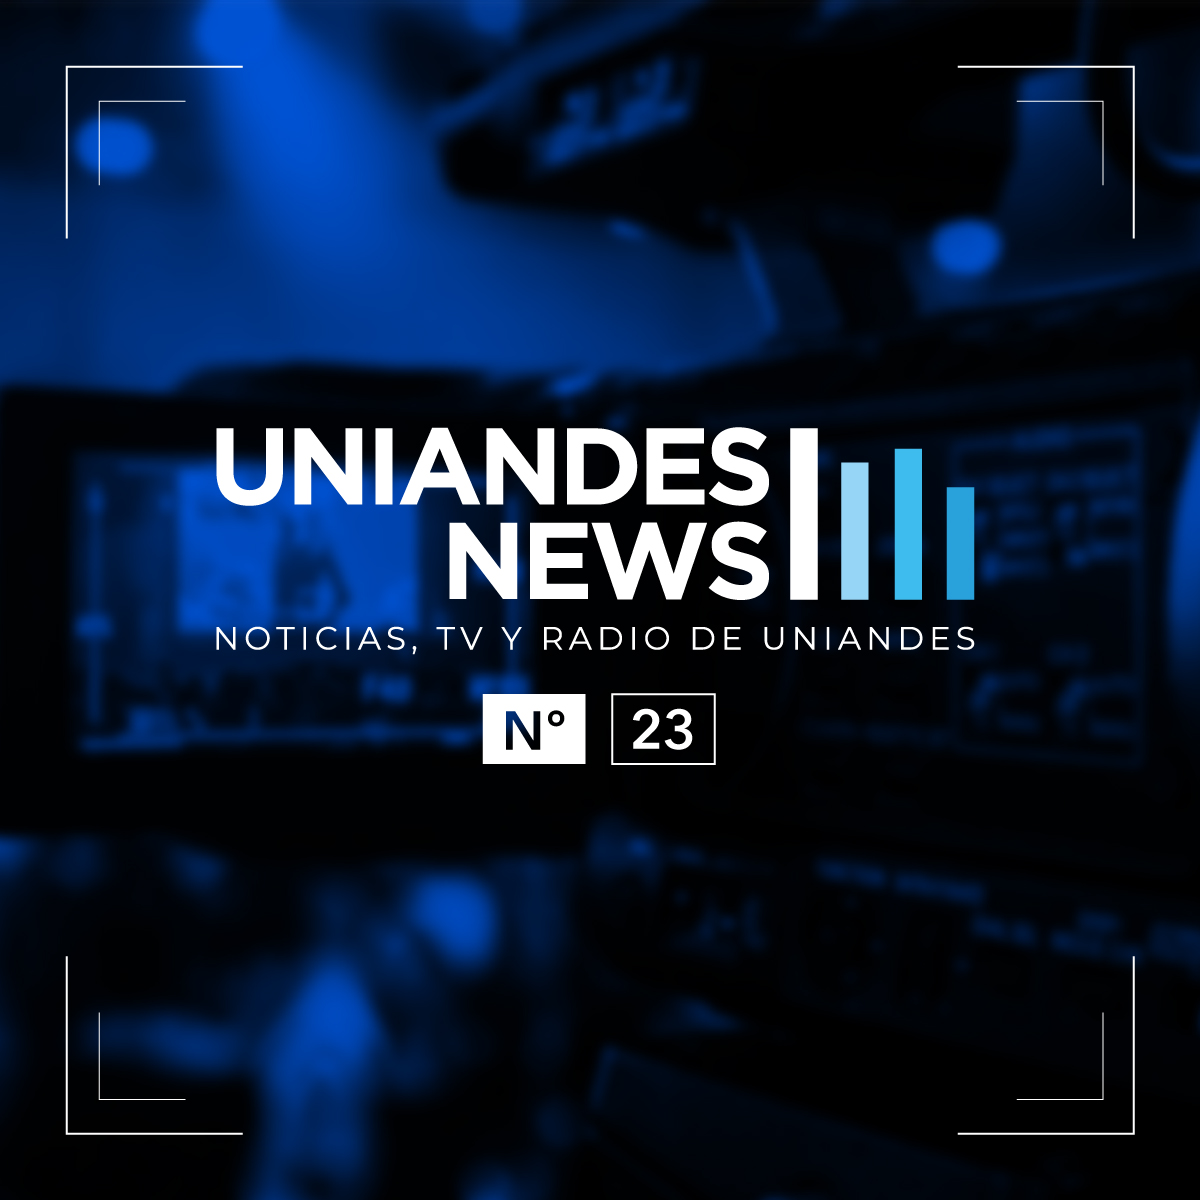 Uniandes news 23